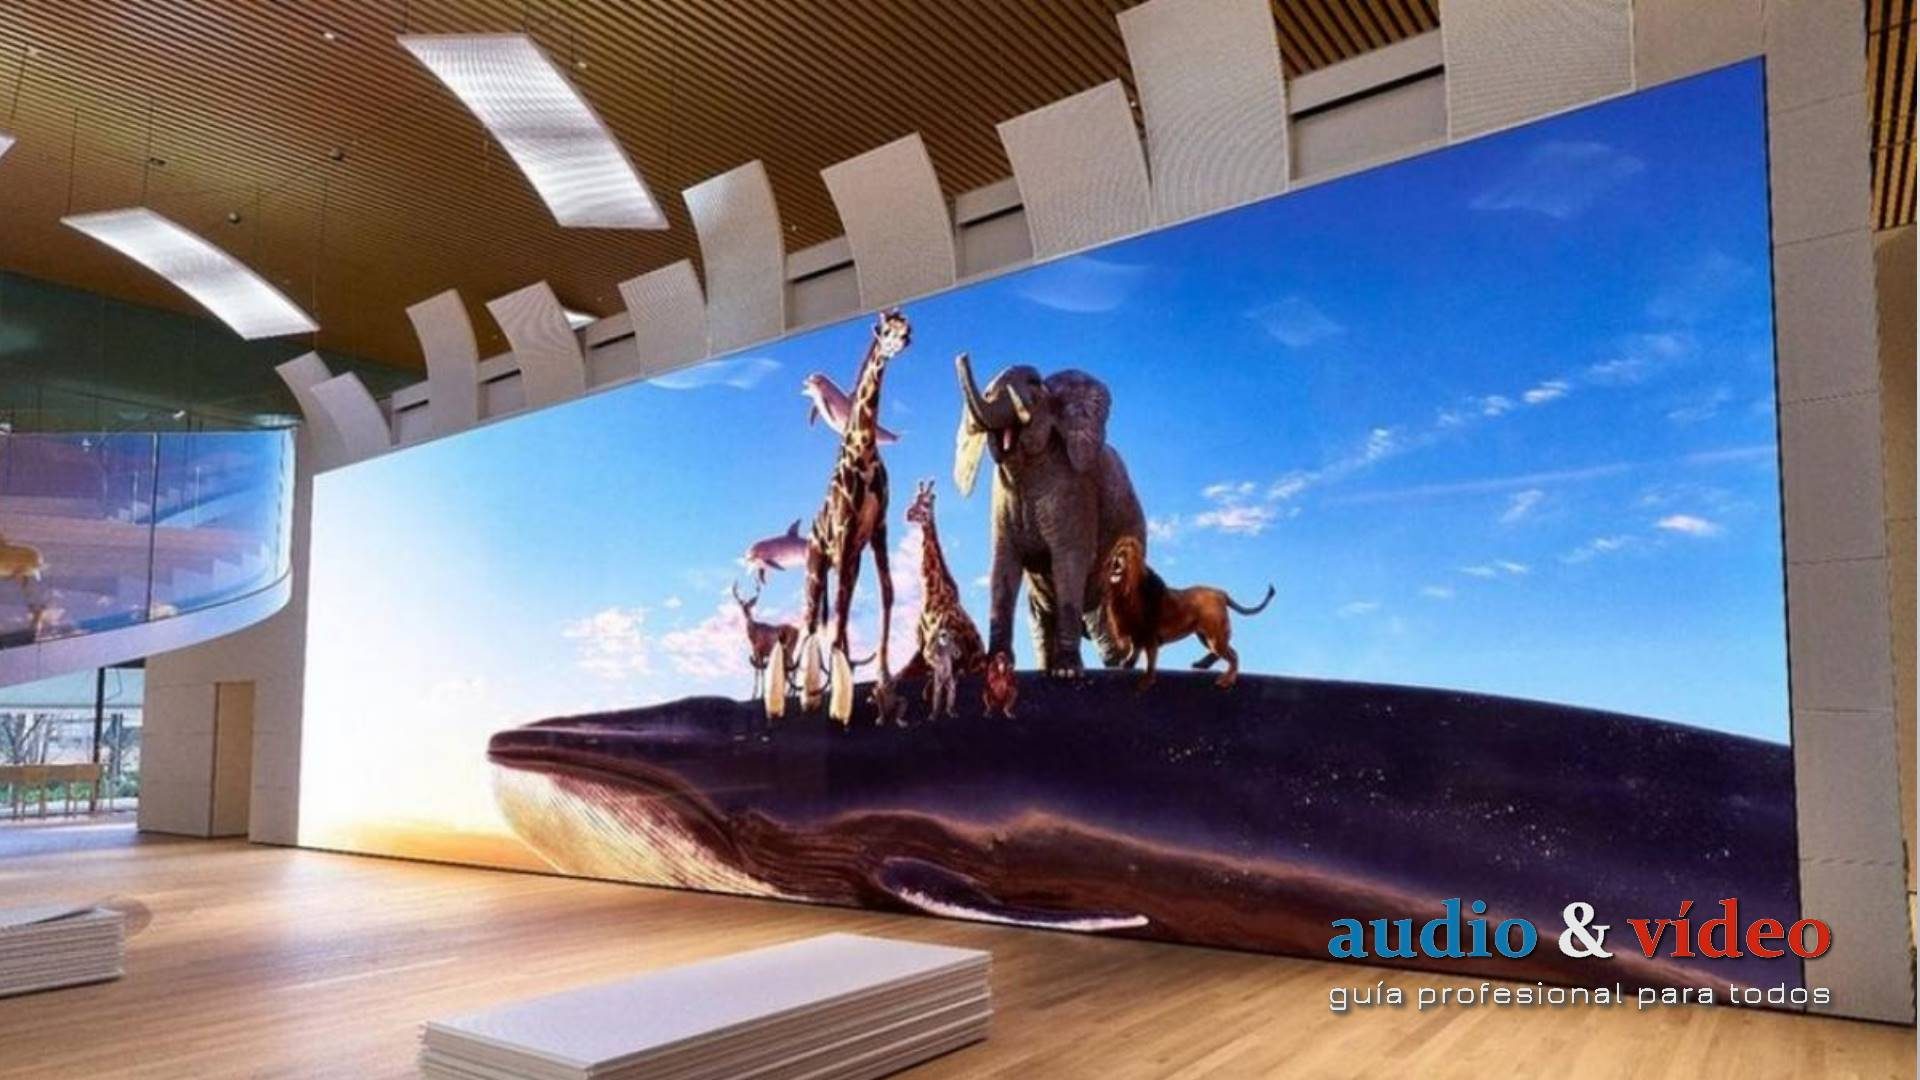 Sony ha instalado una pantalla microled Cledis 4K de 19 metros de longitud en el centro de I+D de Shiseido en Yokohama.